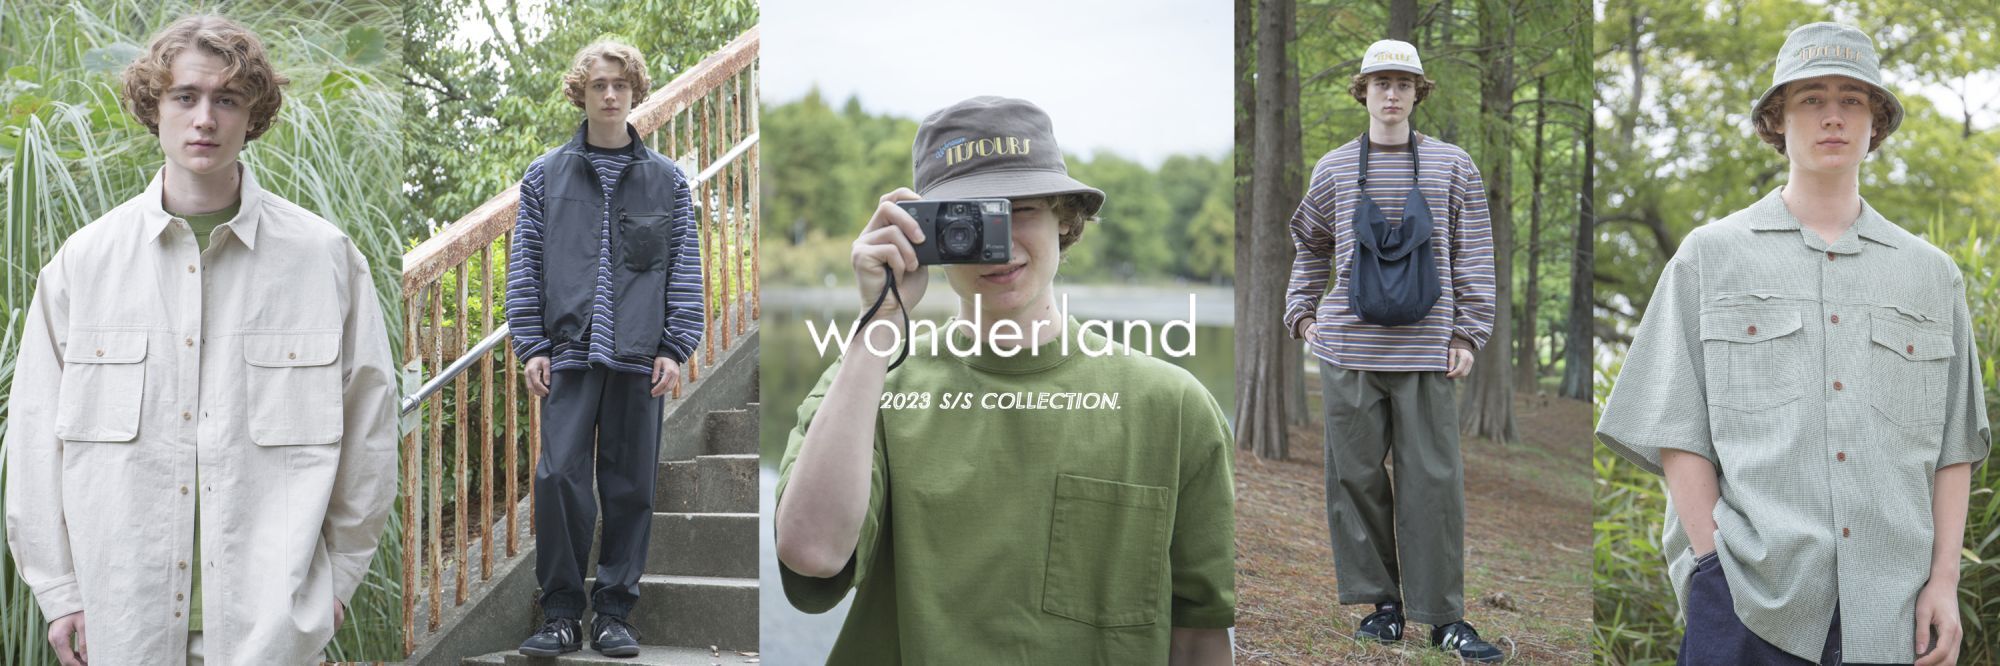 wonderland 2023 S/S Collection.